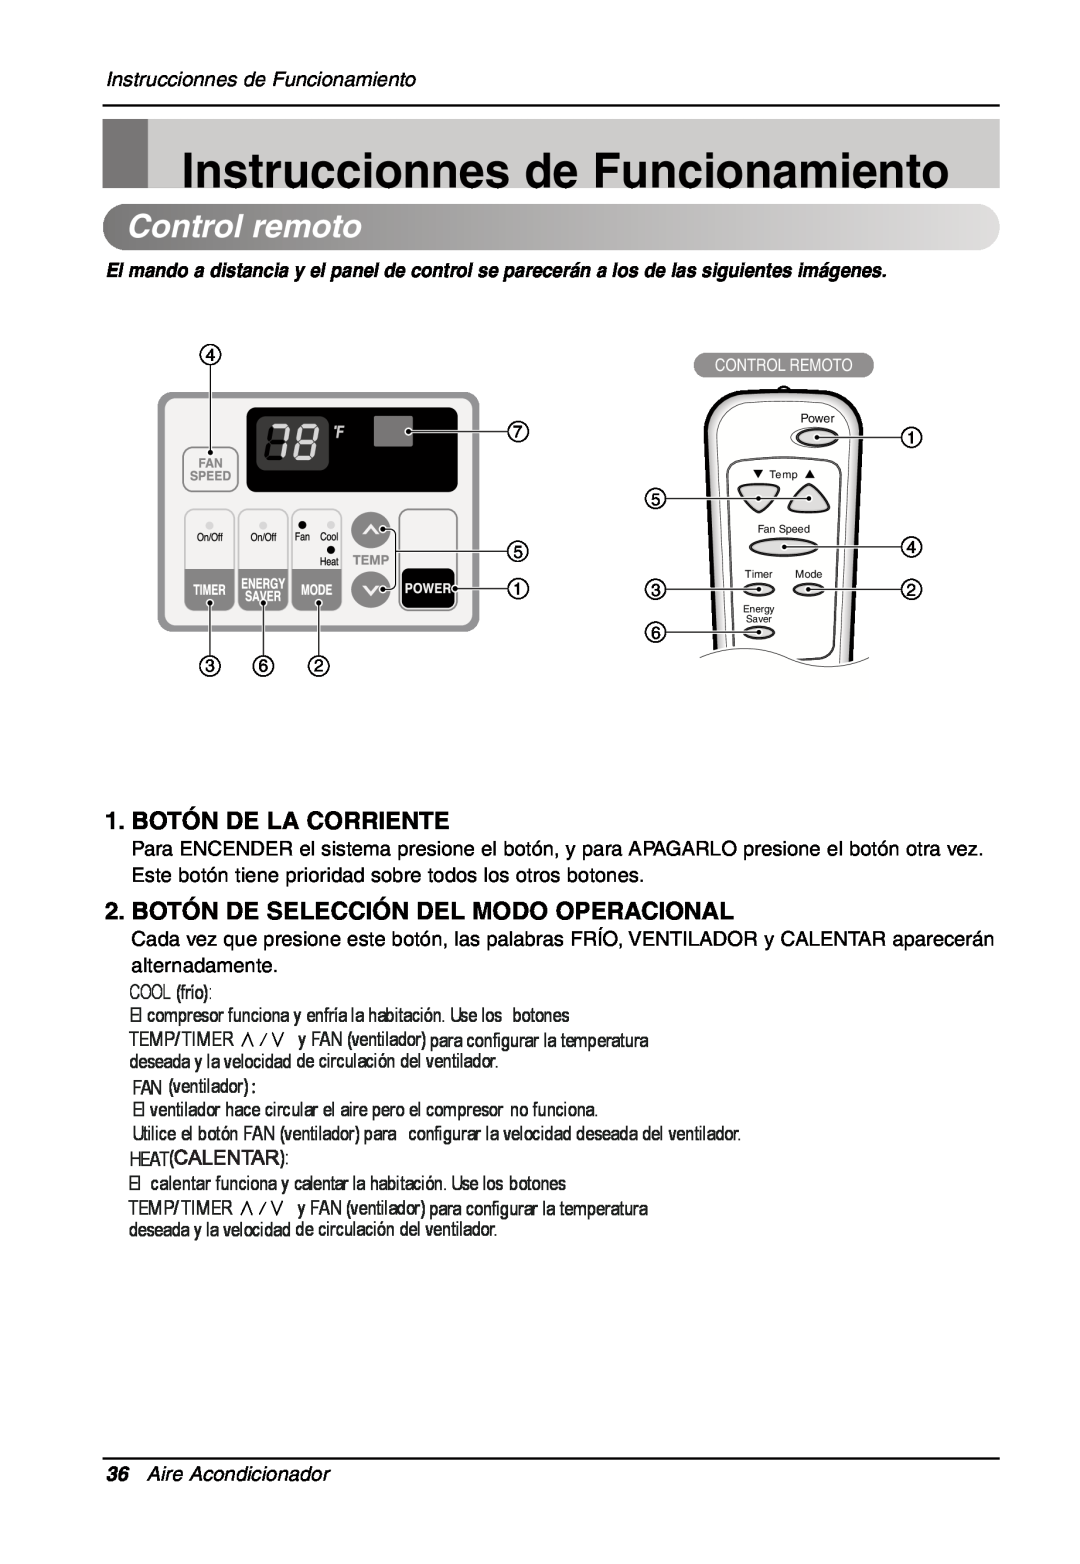 LG Electronics LW701 HR owner manual Instruccionnes de Funcionamiento, Control remoto, Aire Acondicionador 